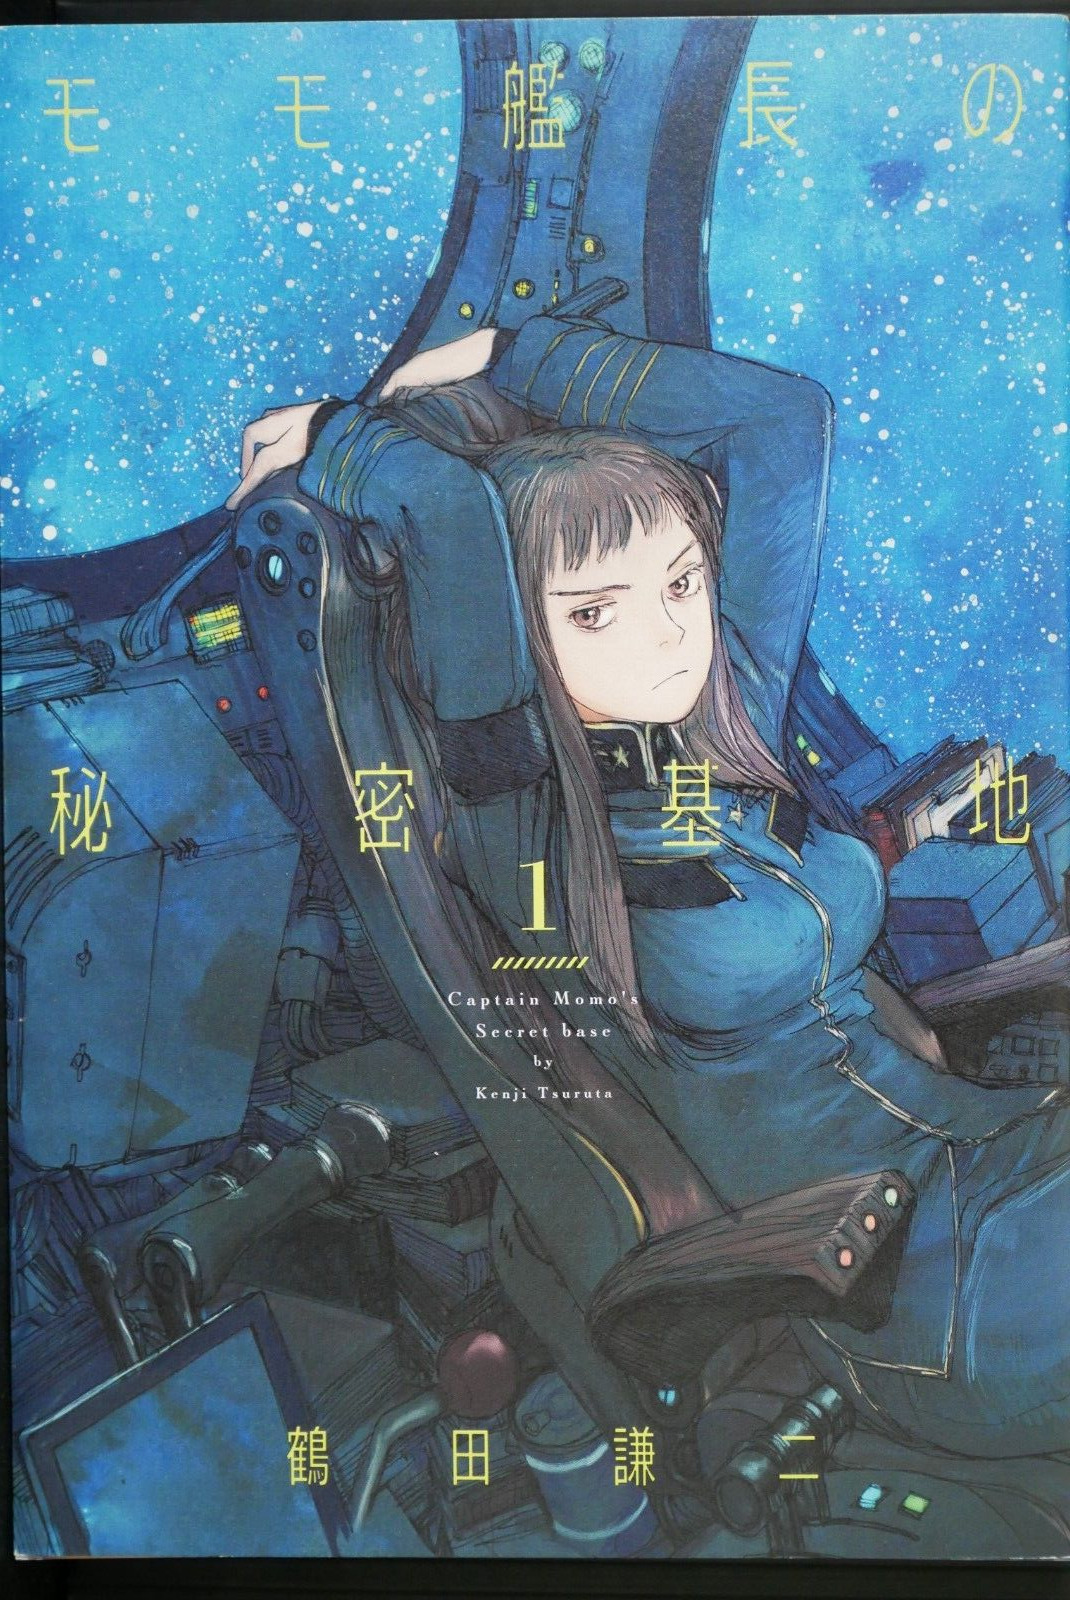 Captain Momo's Secret base vol.1 manga by Kenji Tsuruta - JAPAN